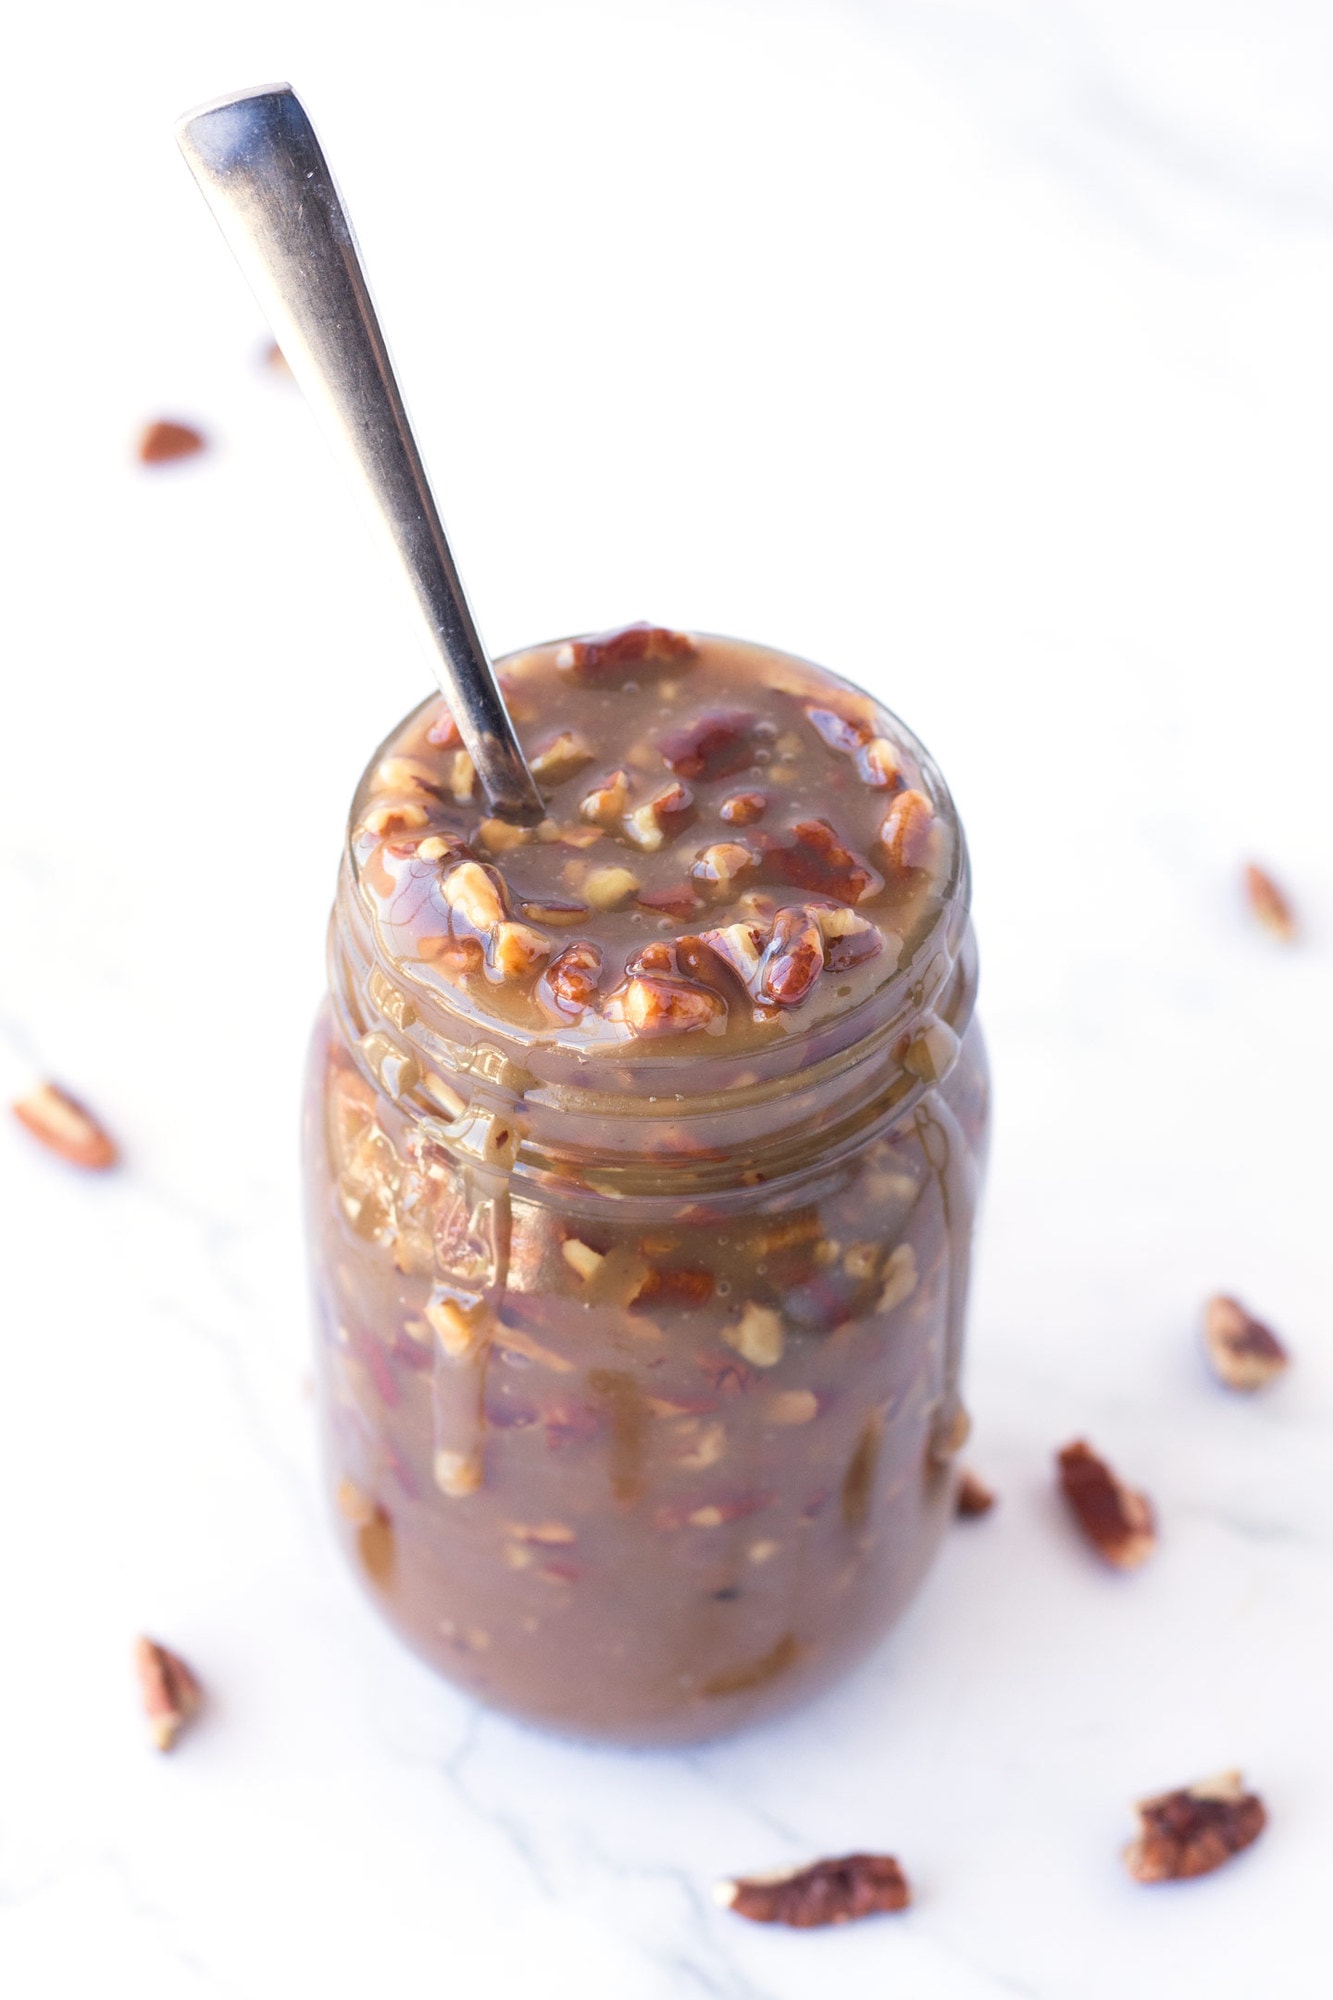 Jar of microwave caramel pecan sauce with a spoon inside.